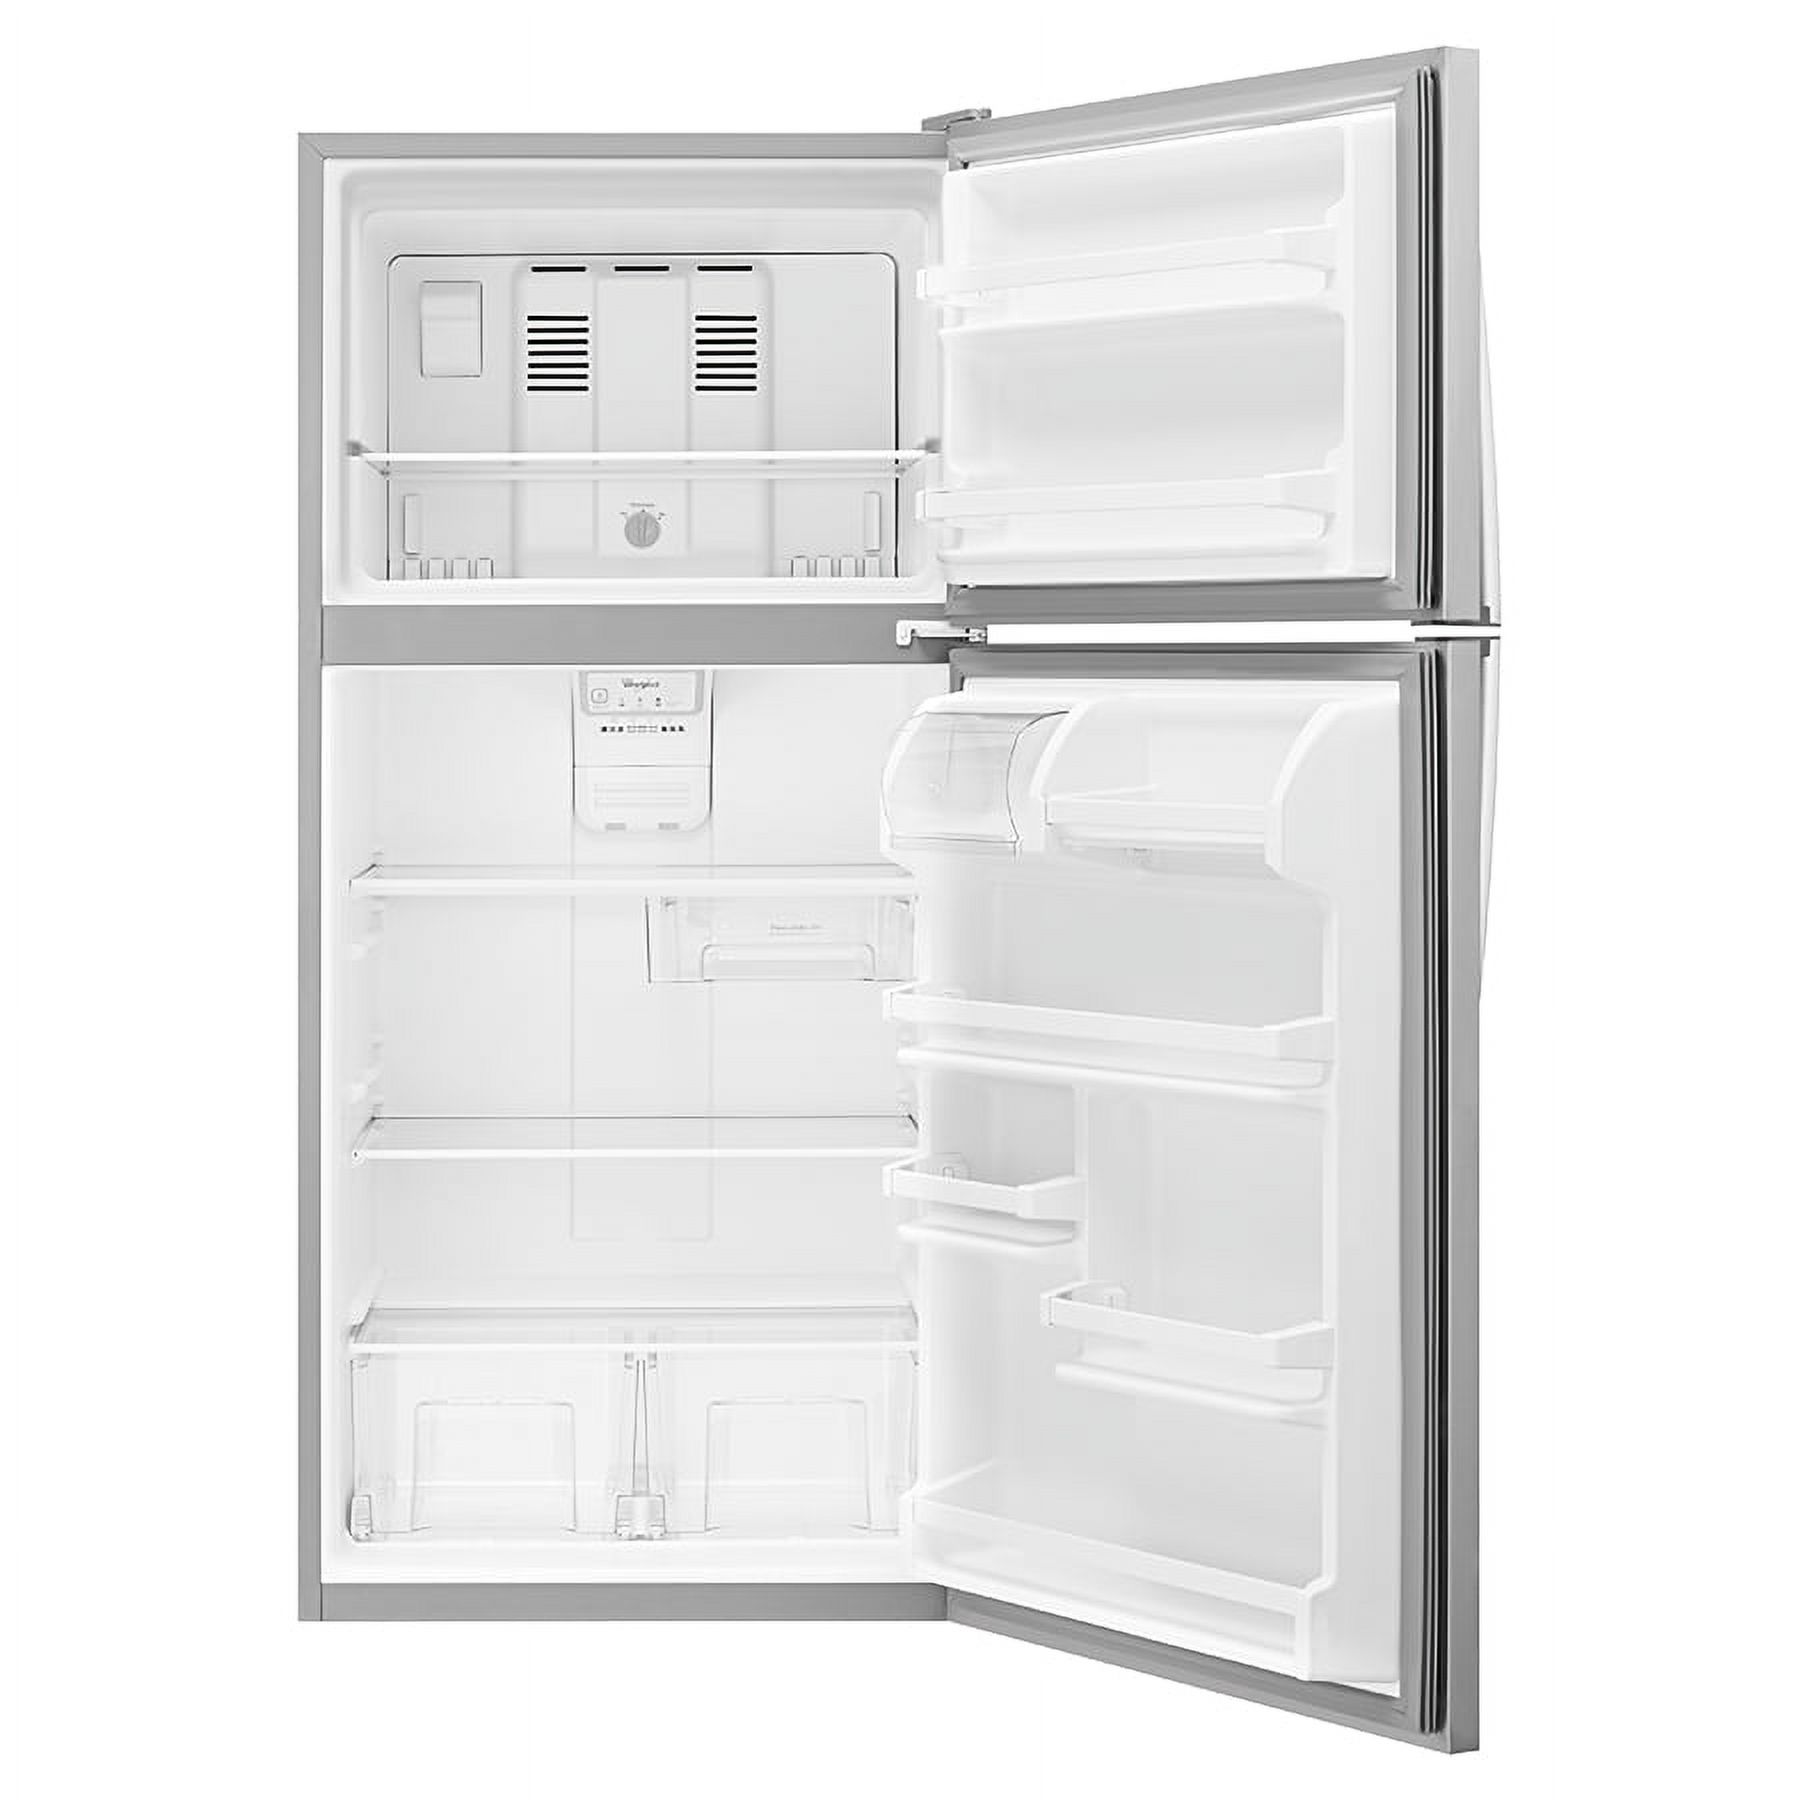 Whirlpool® WRT318FZDM: 30-inch Wide Top Freezer Refrigerator - 18 cu. ft - Stainless Steel. - image 3 of 8